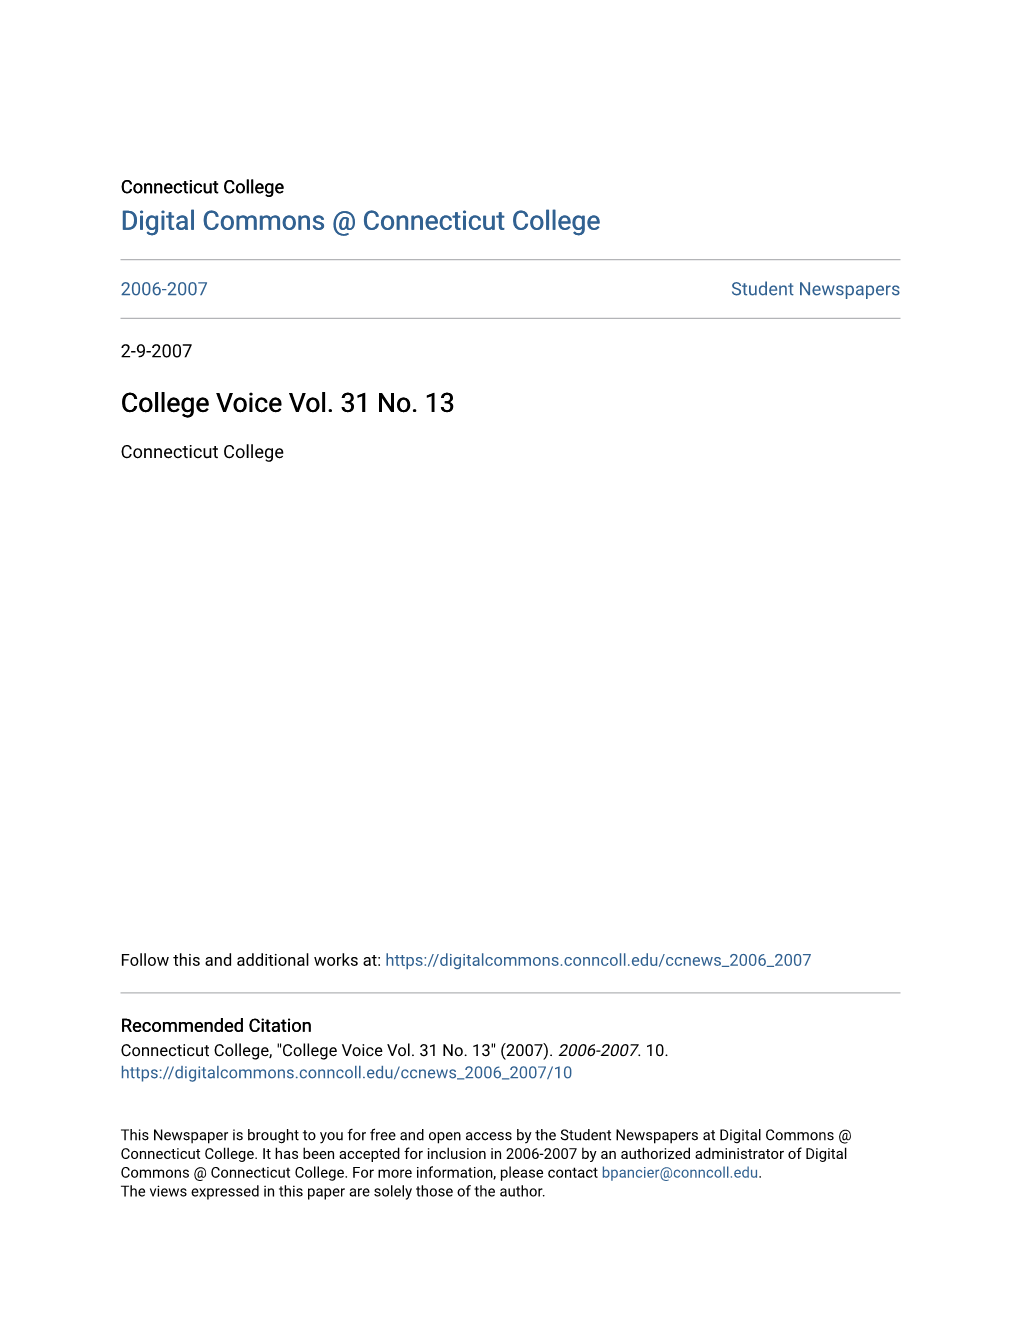 College Voice Vol. 31 No. 13